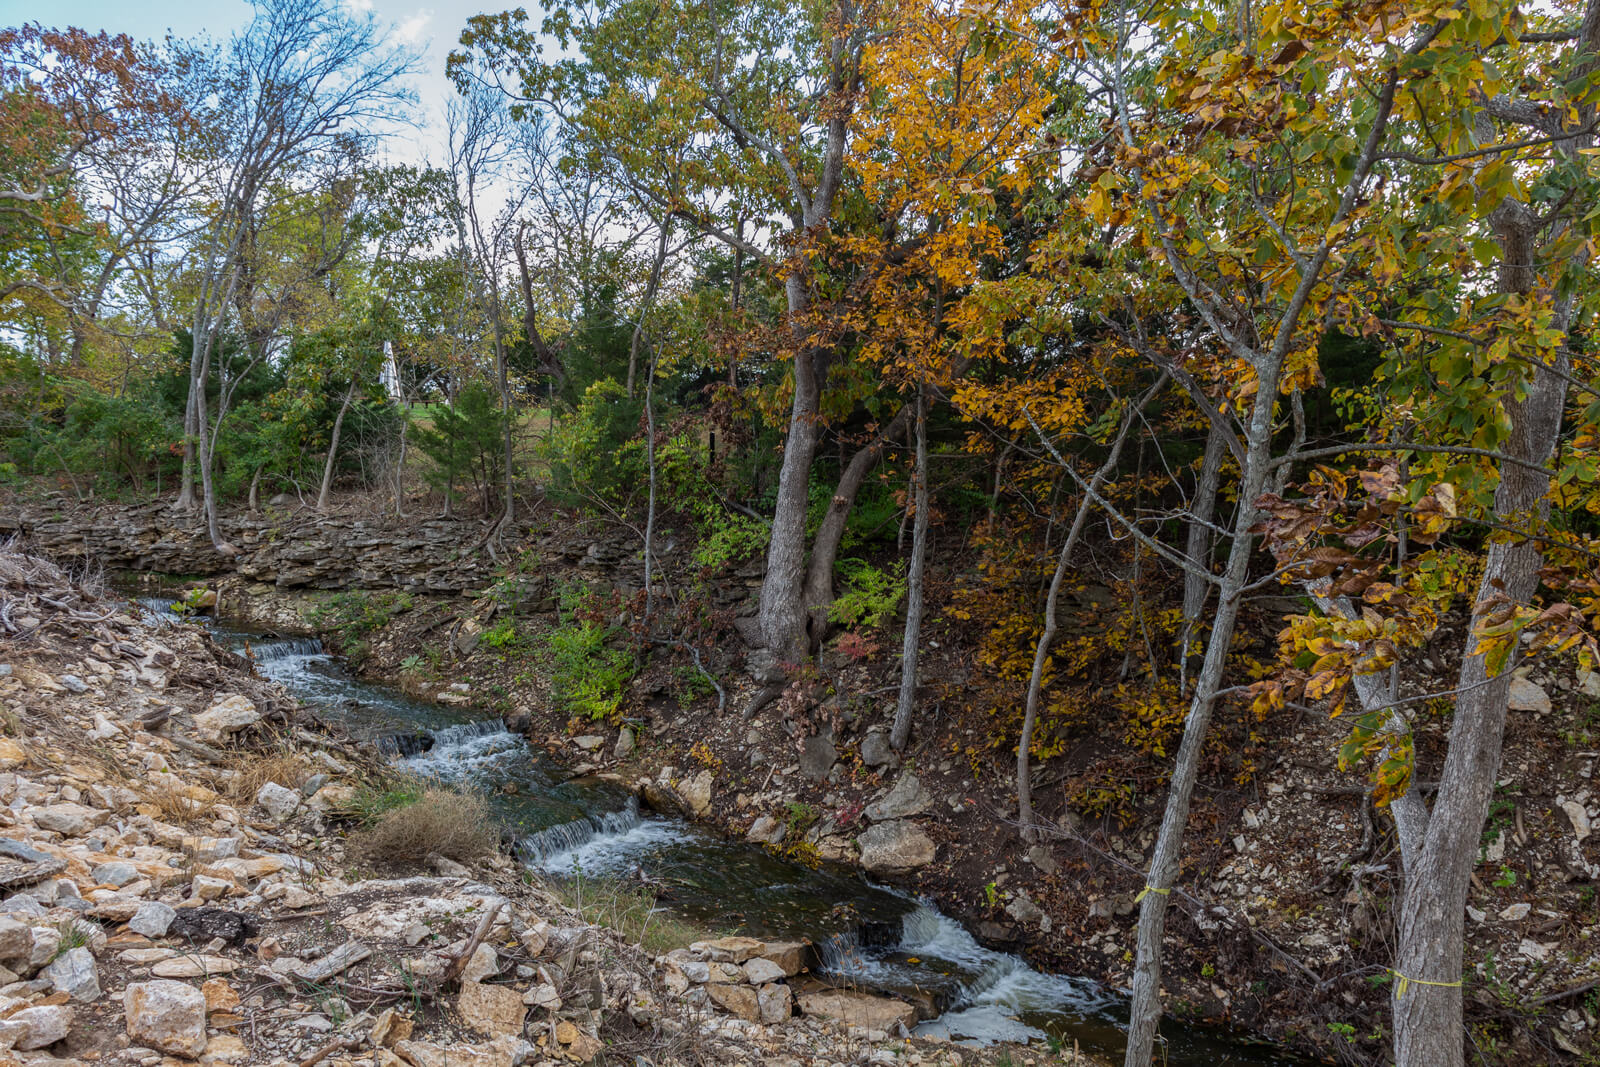 Creek to explore with fall foliage in Olathe.